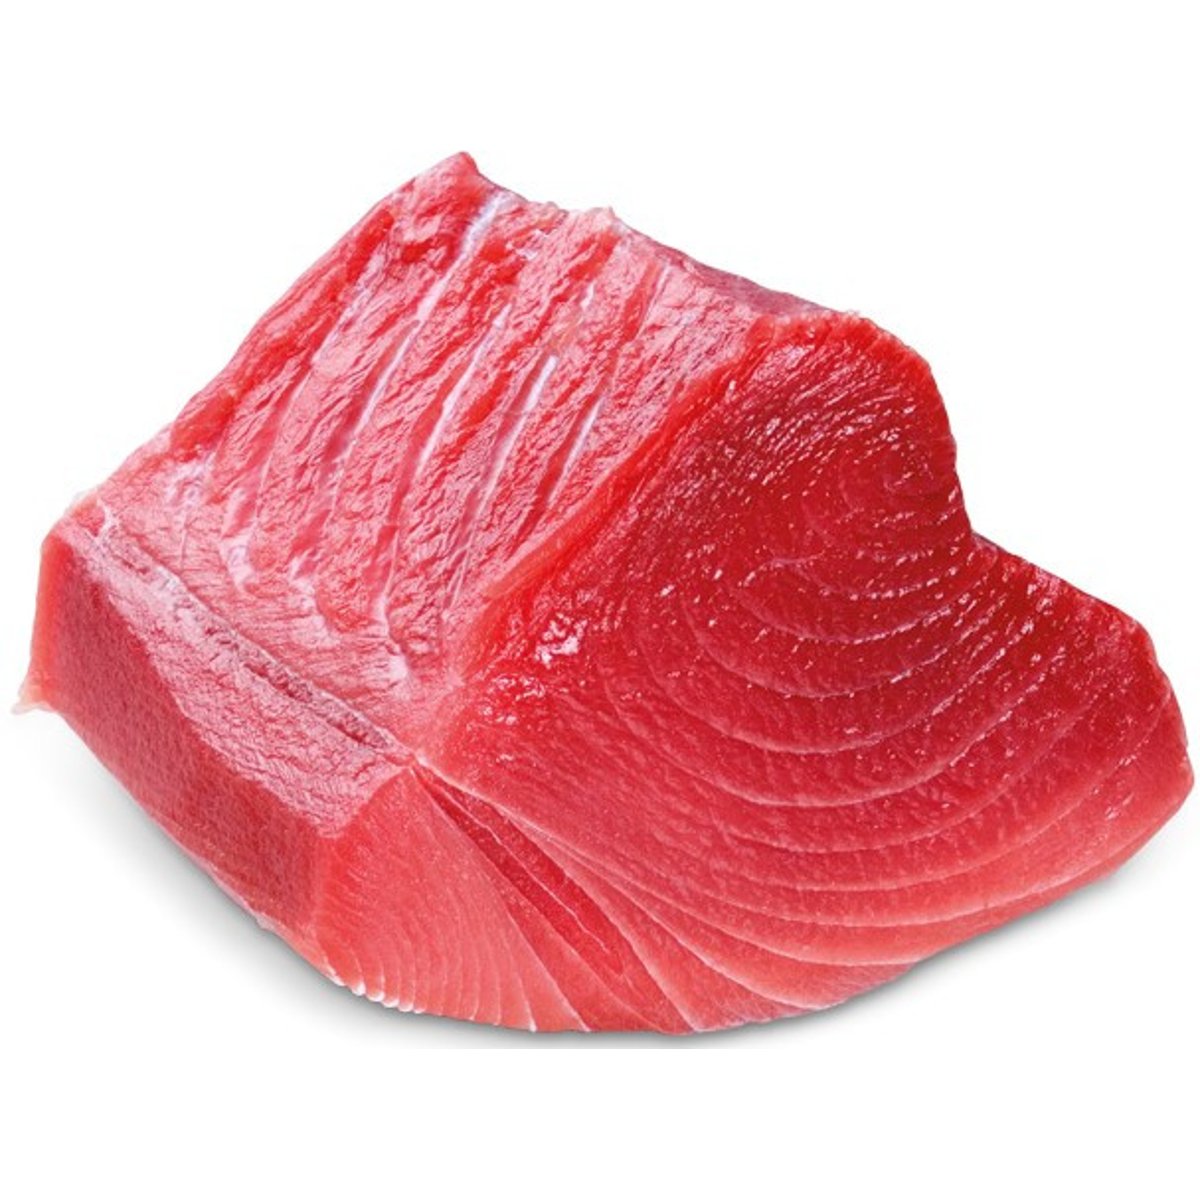 Tuňák steak